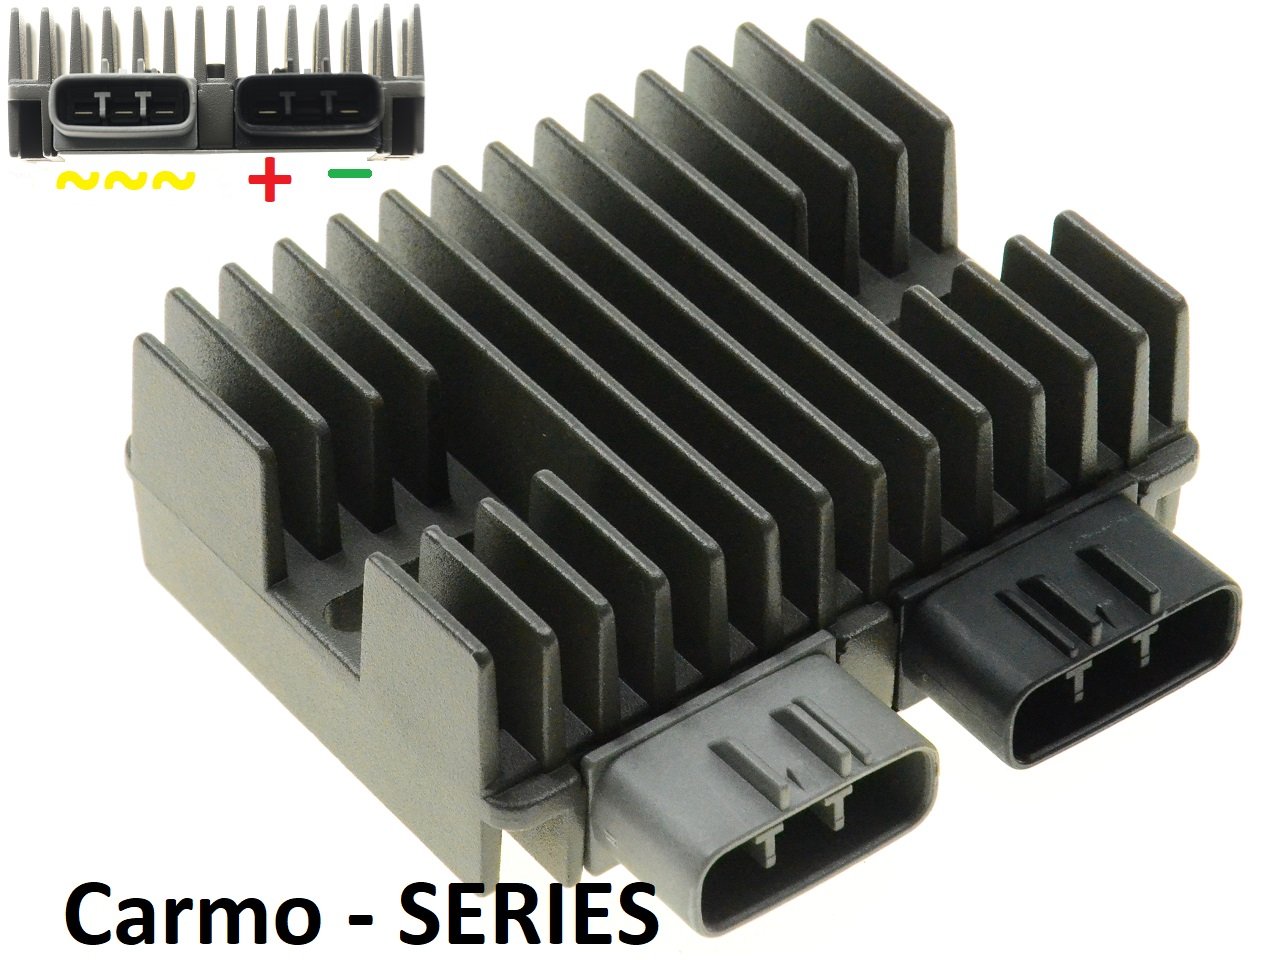 CARR5925-SERIE - MOSFET SERIE SERIES Spanningsregelaar gelijkrichter (verbeterde SH847) als compu-fire